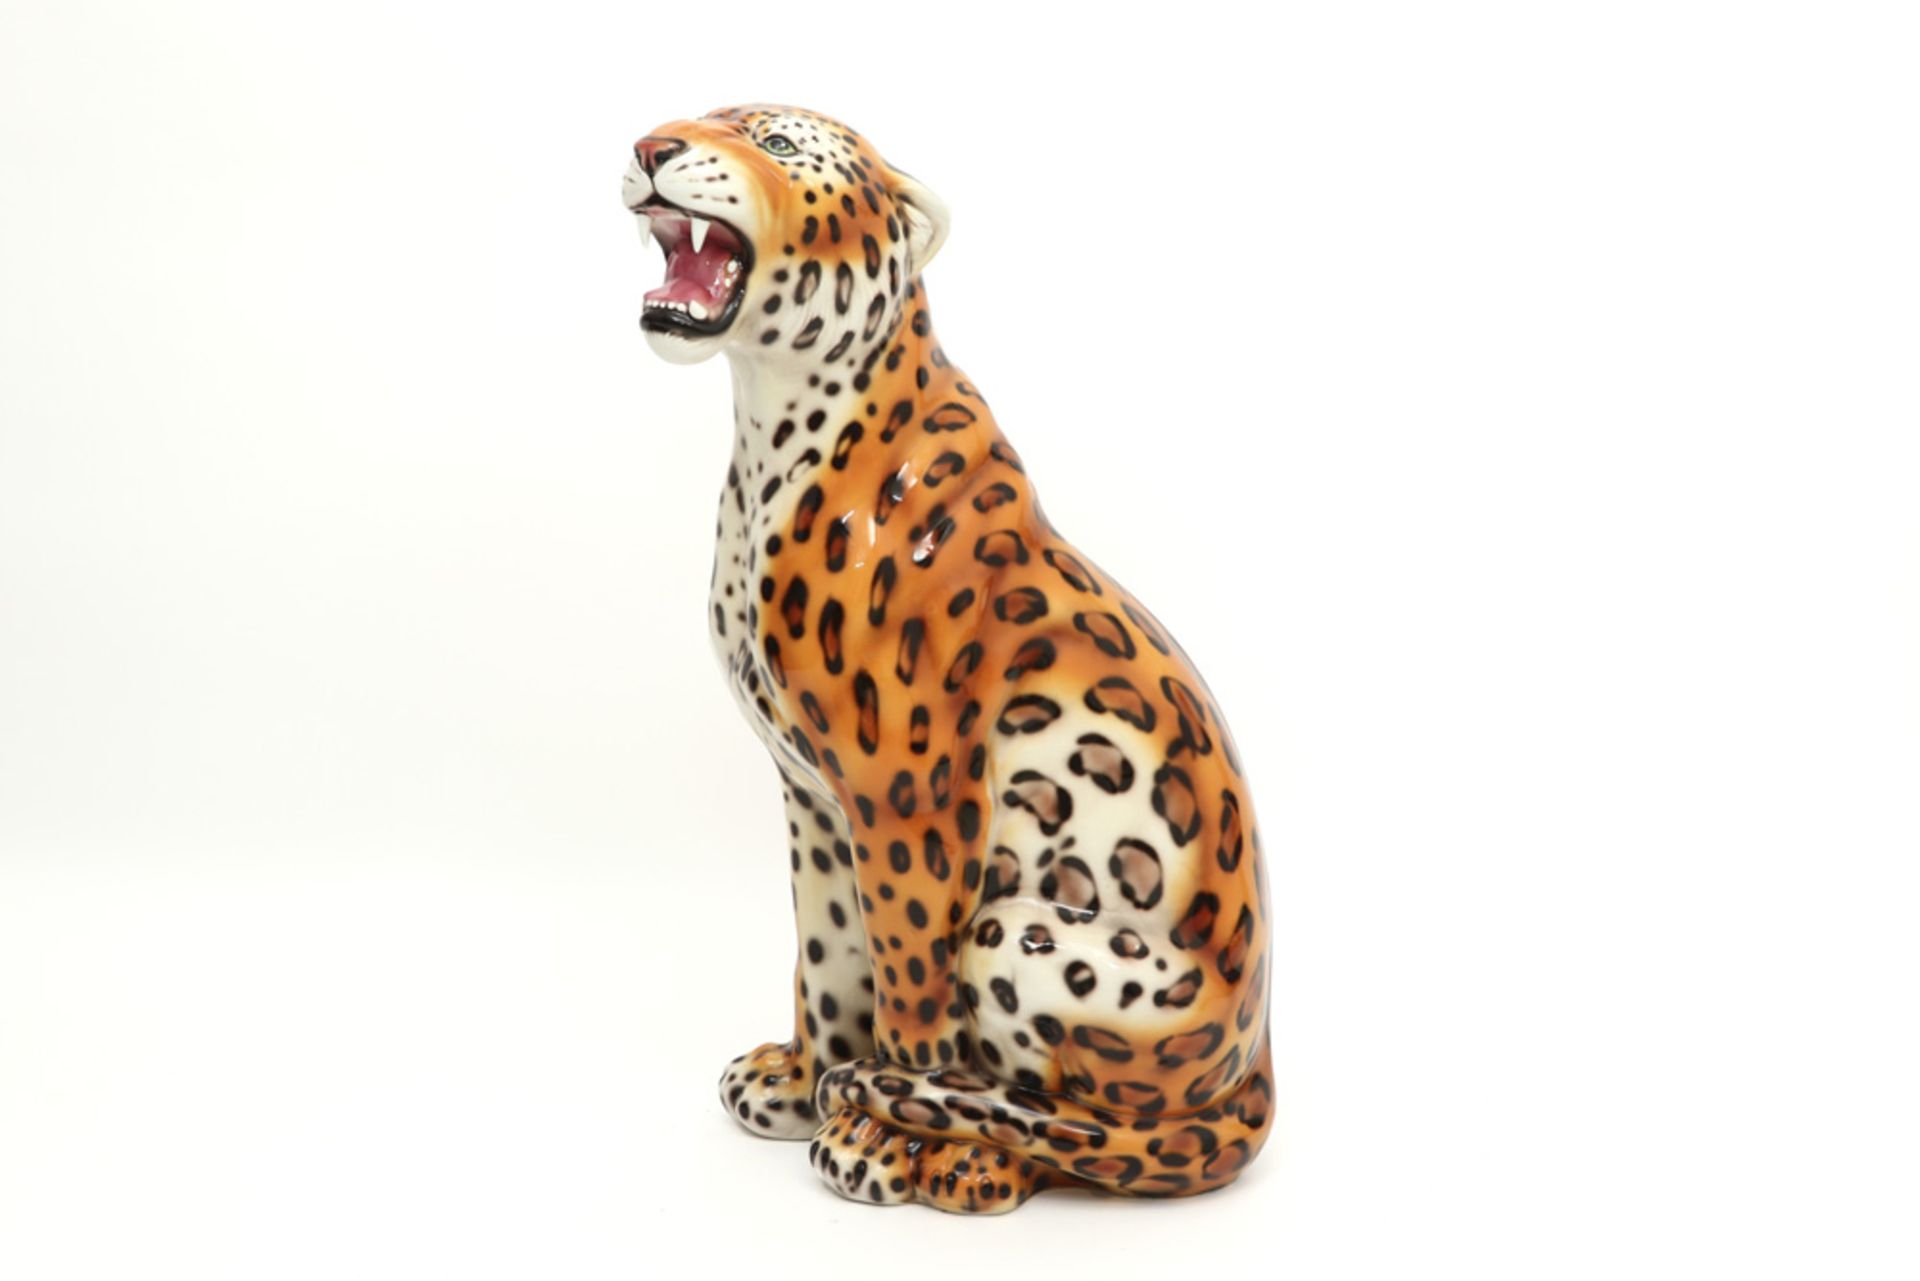 fifties'/sxties' Italian "Sitting leopard" sculpture in ceramic